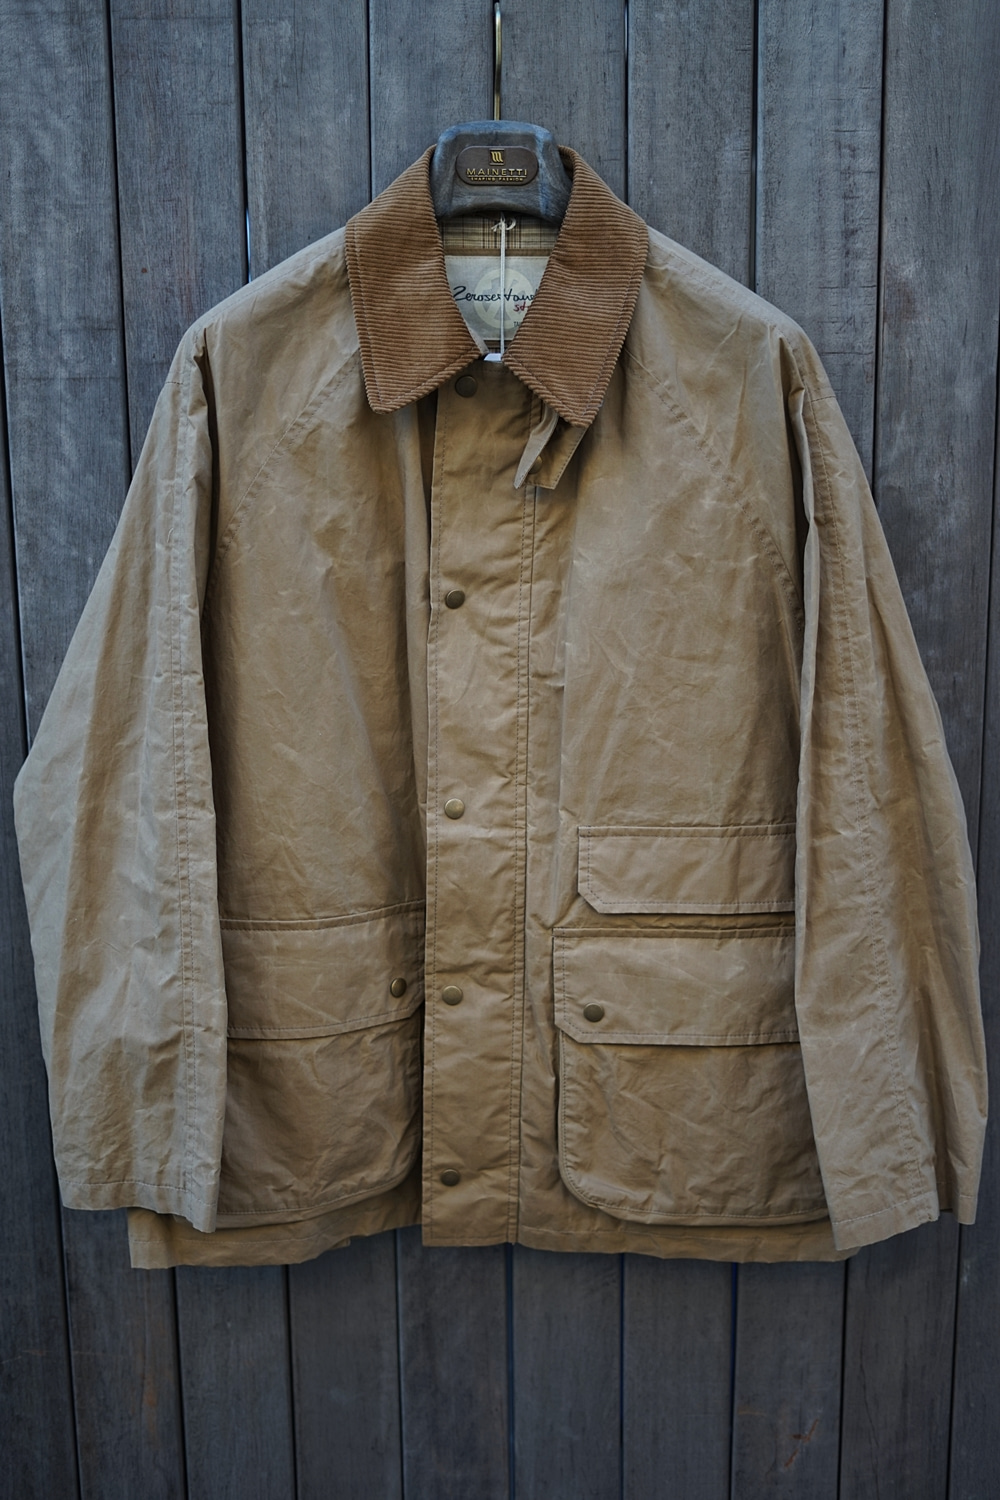 M+ 249 wax cotton Field jacketLimpermeabile(임페르미아빌레)입점기념 세일